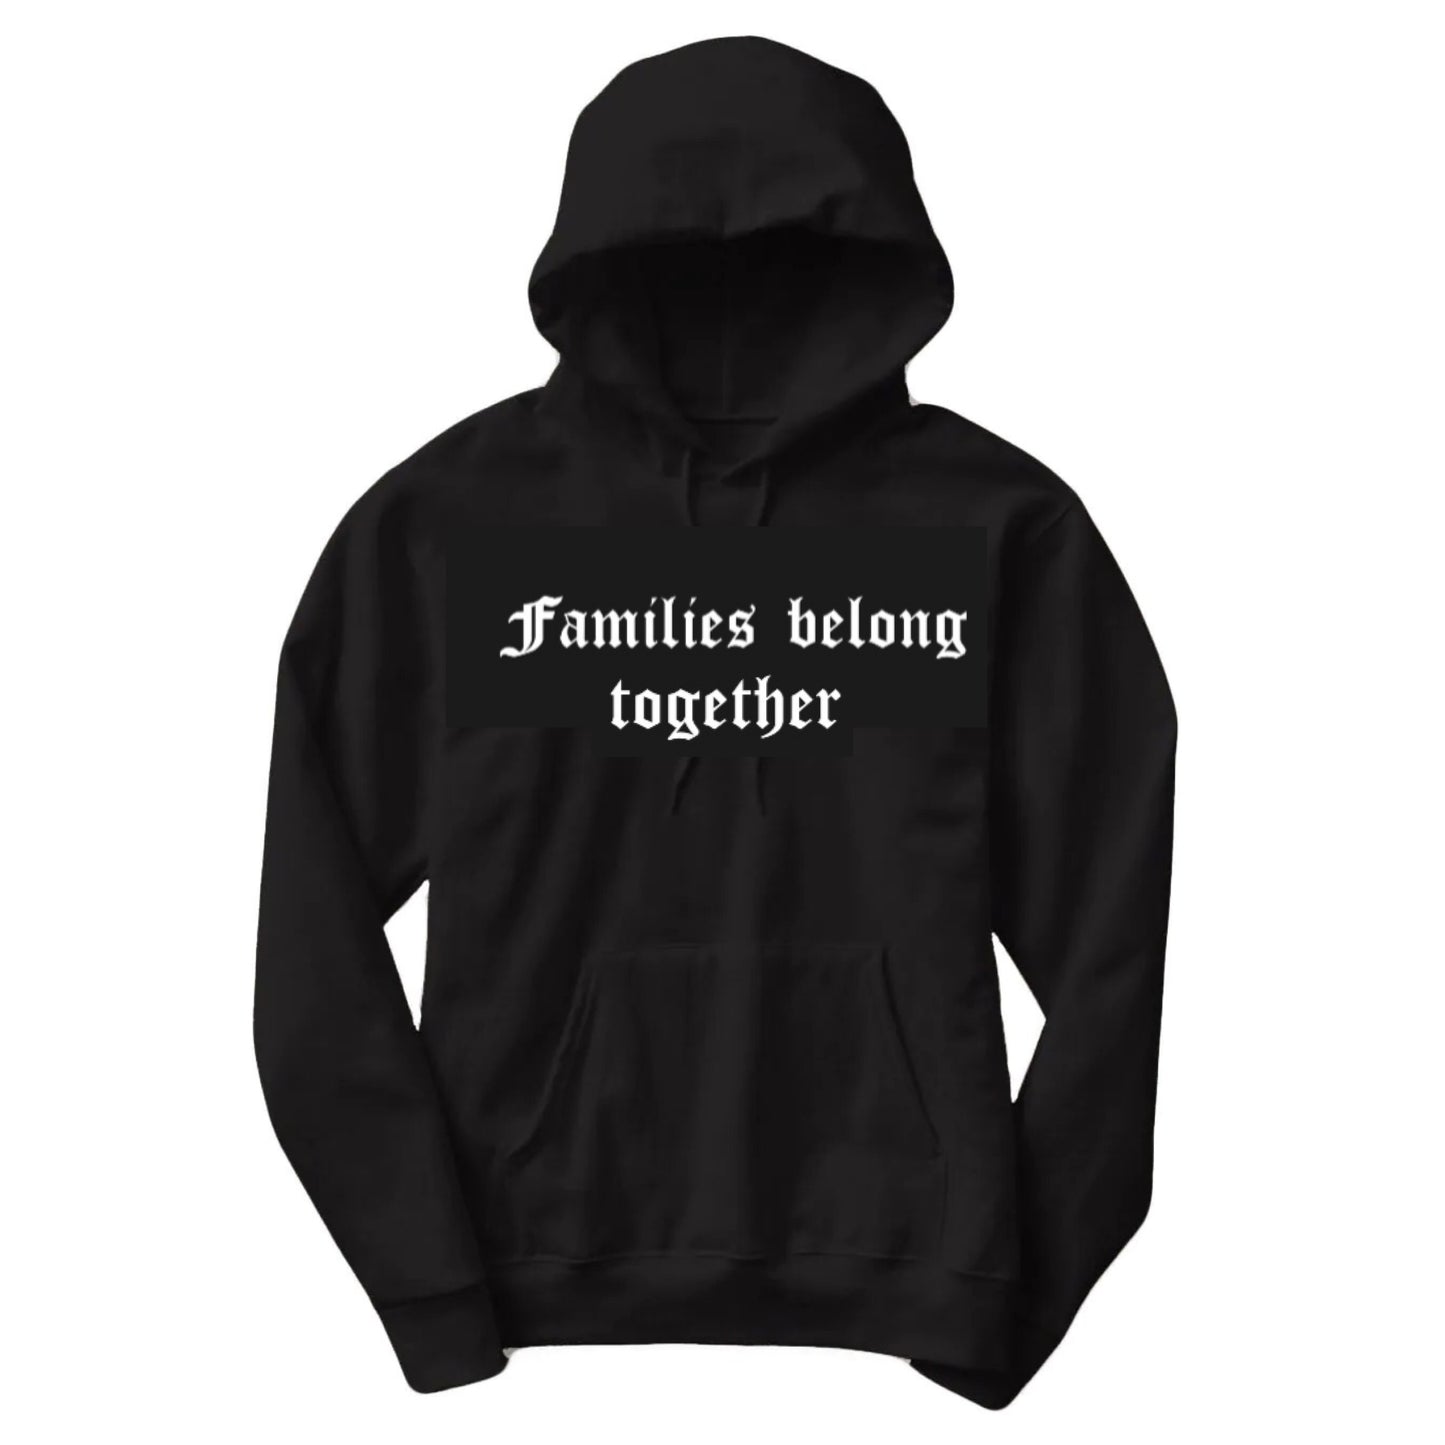 Families belong together hoodie